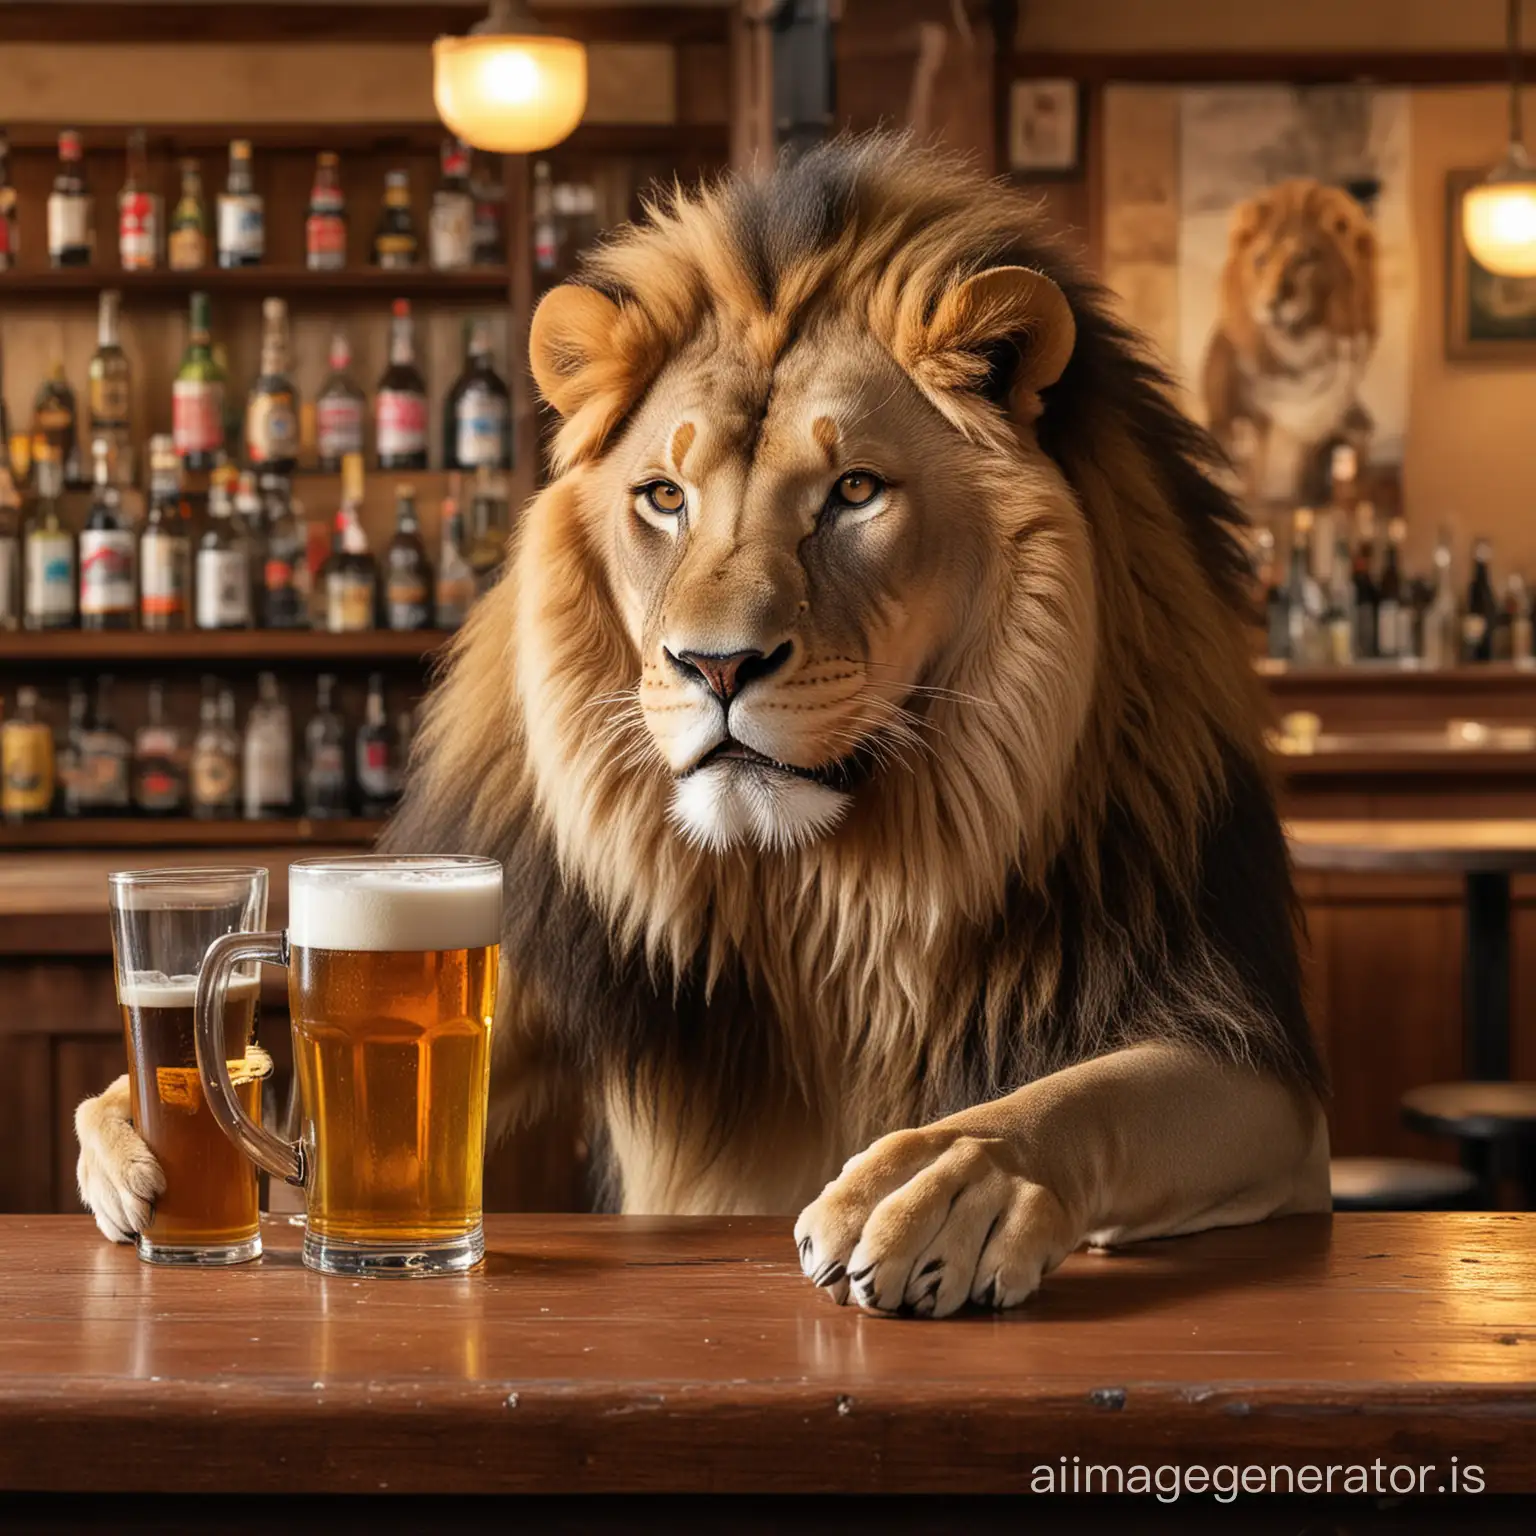 Lion-Enjoying-a-Beer-at-a-SafariThemed-Bar